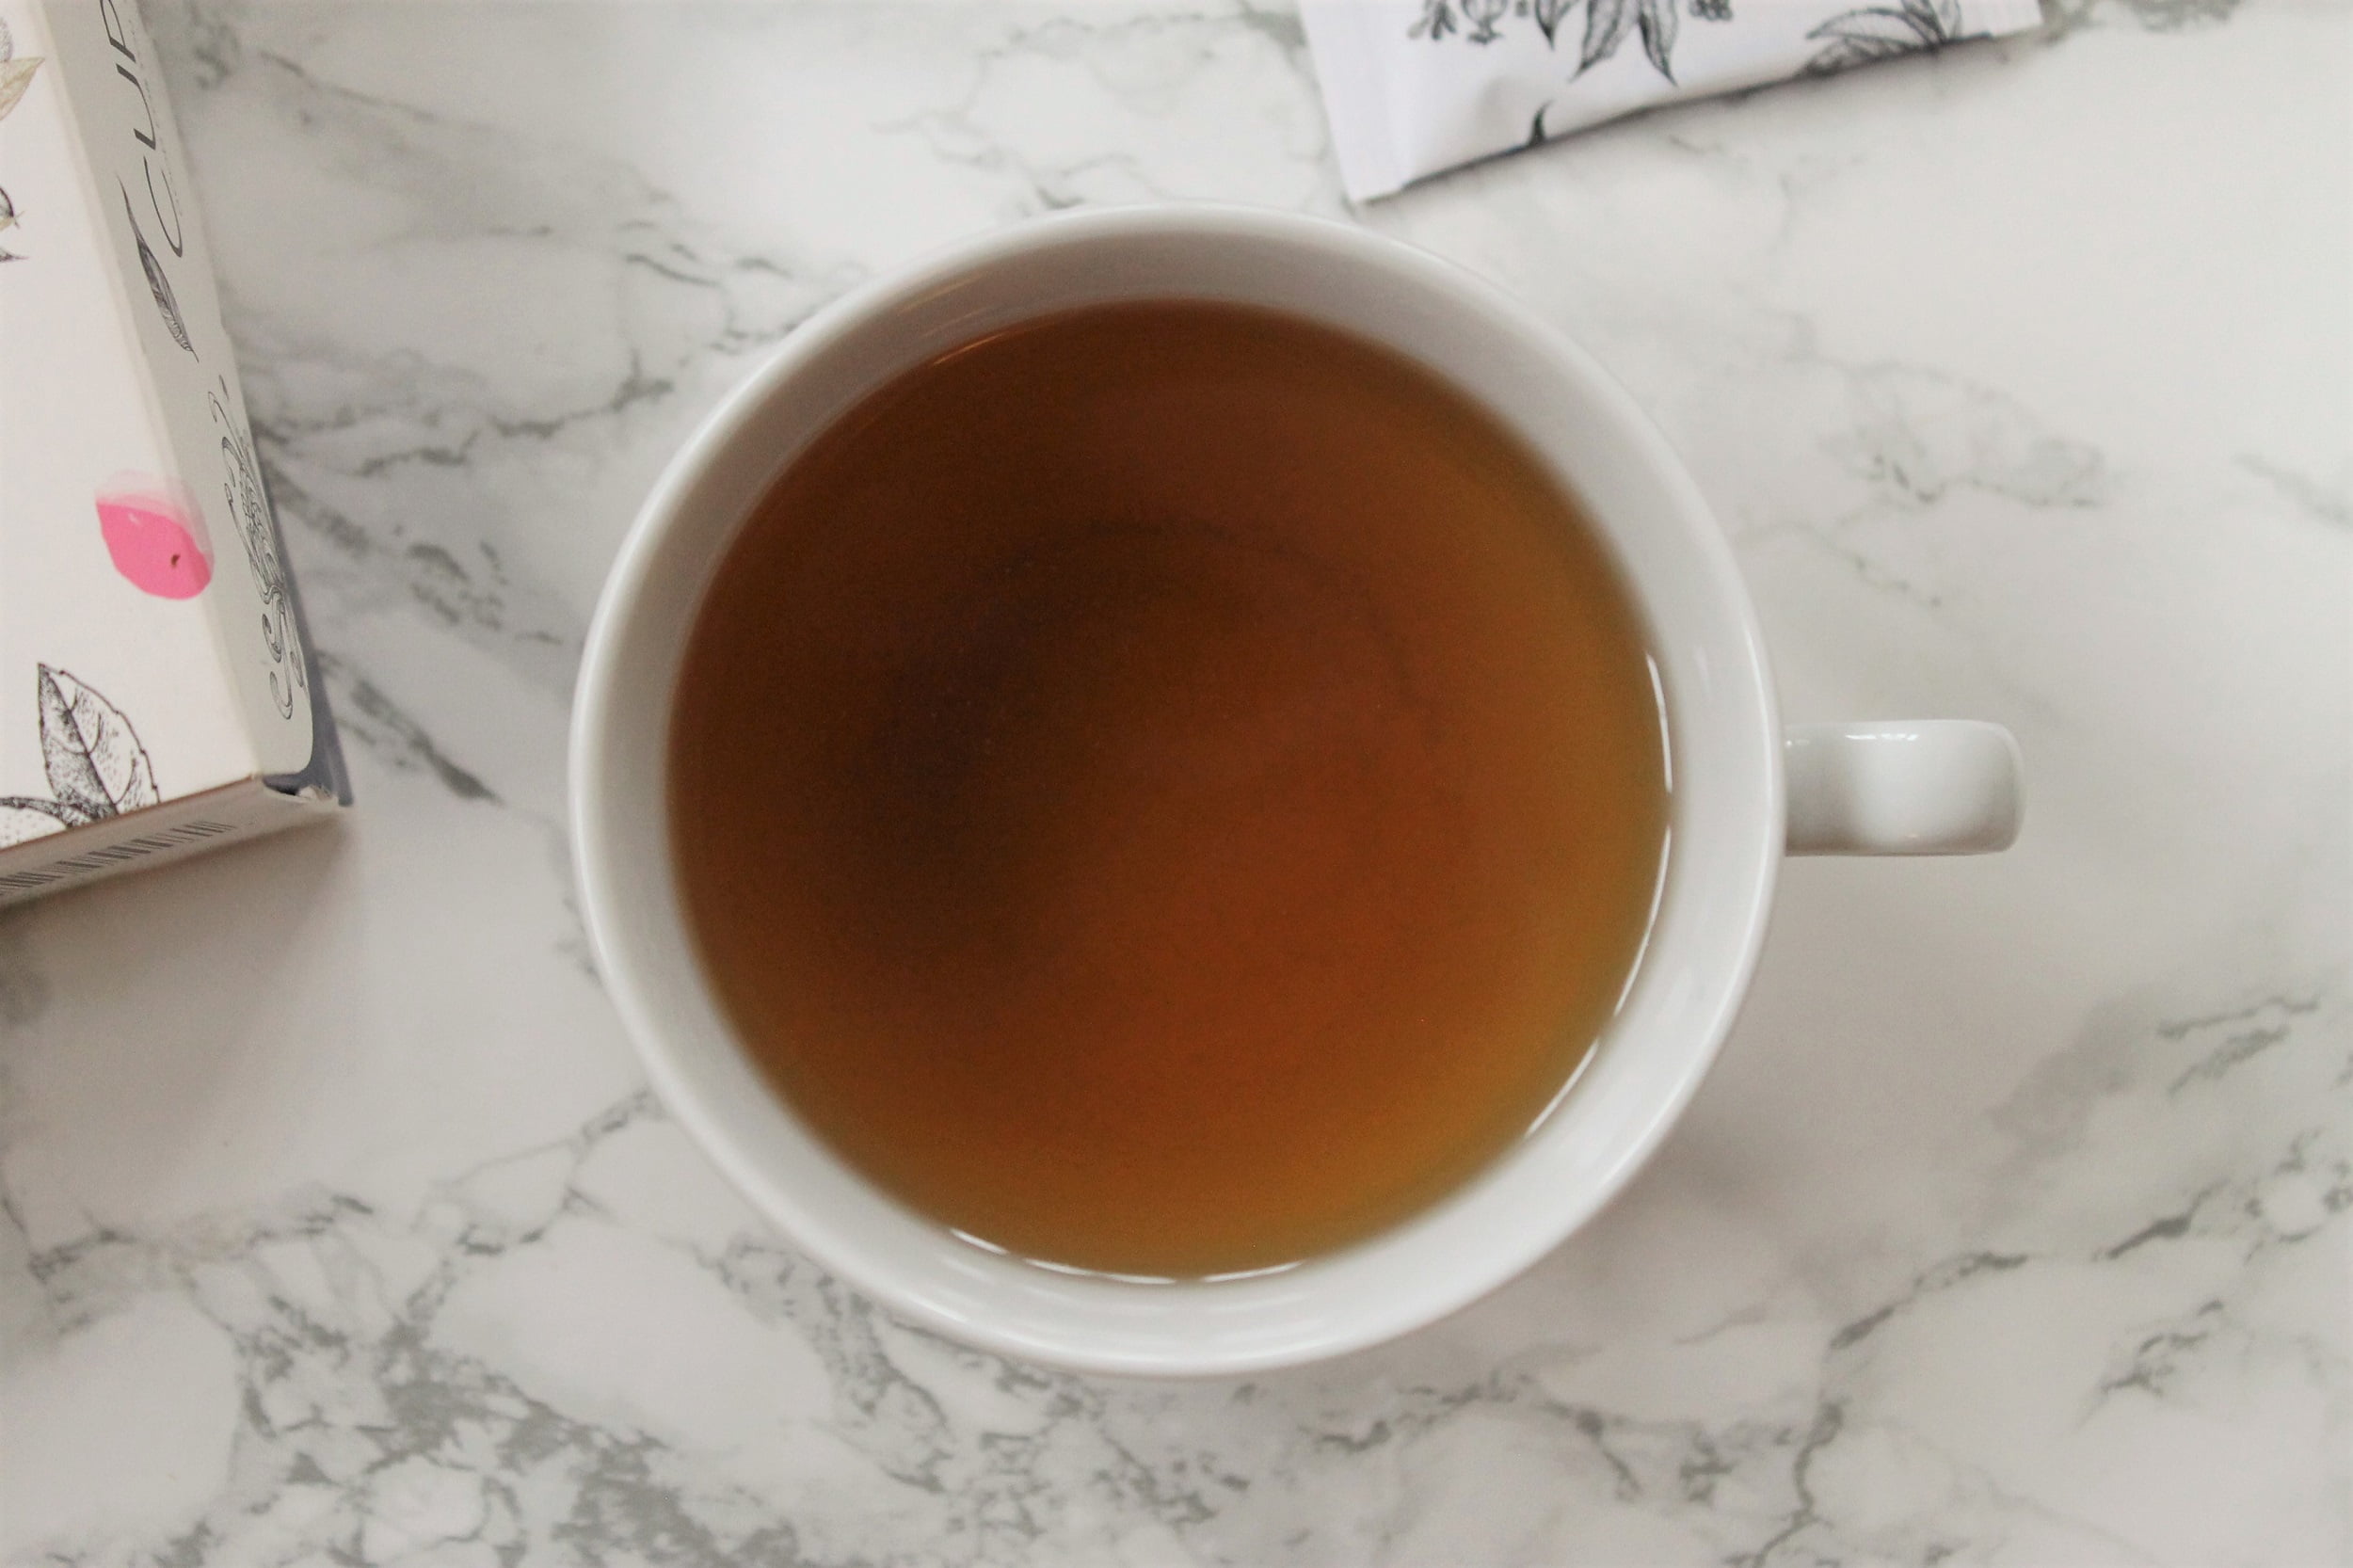 orange brown tea in white teacup